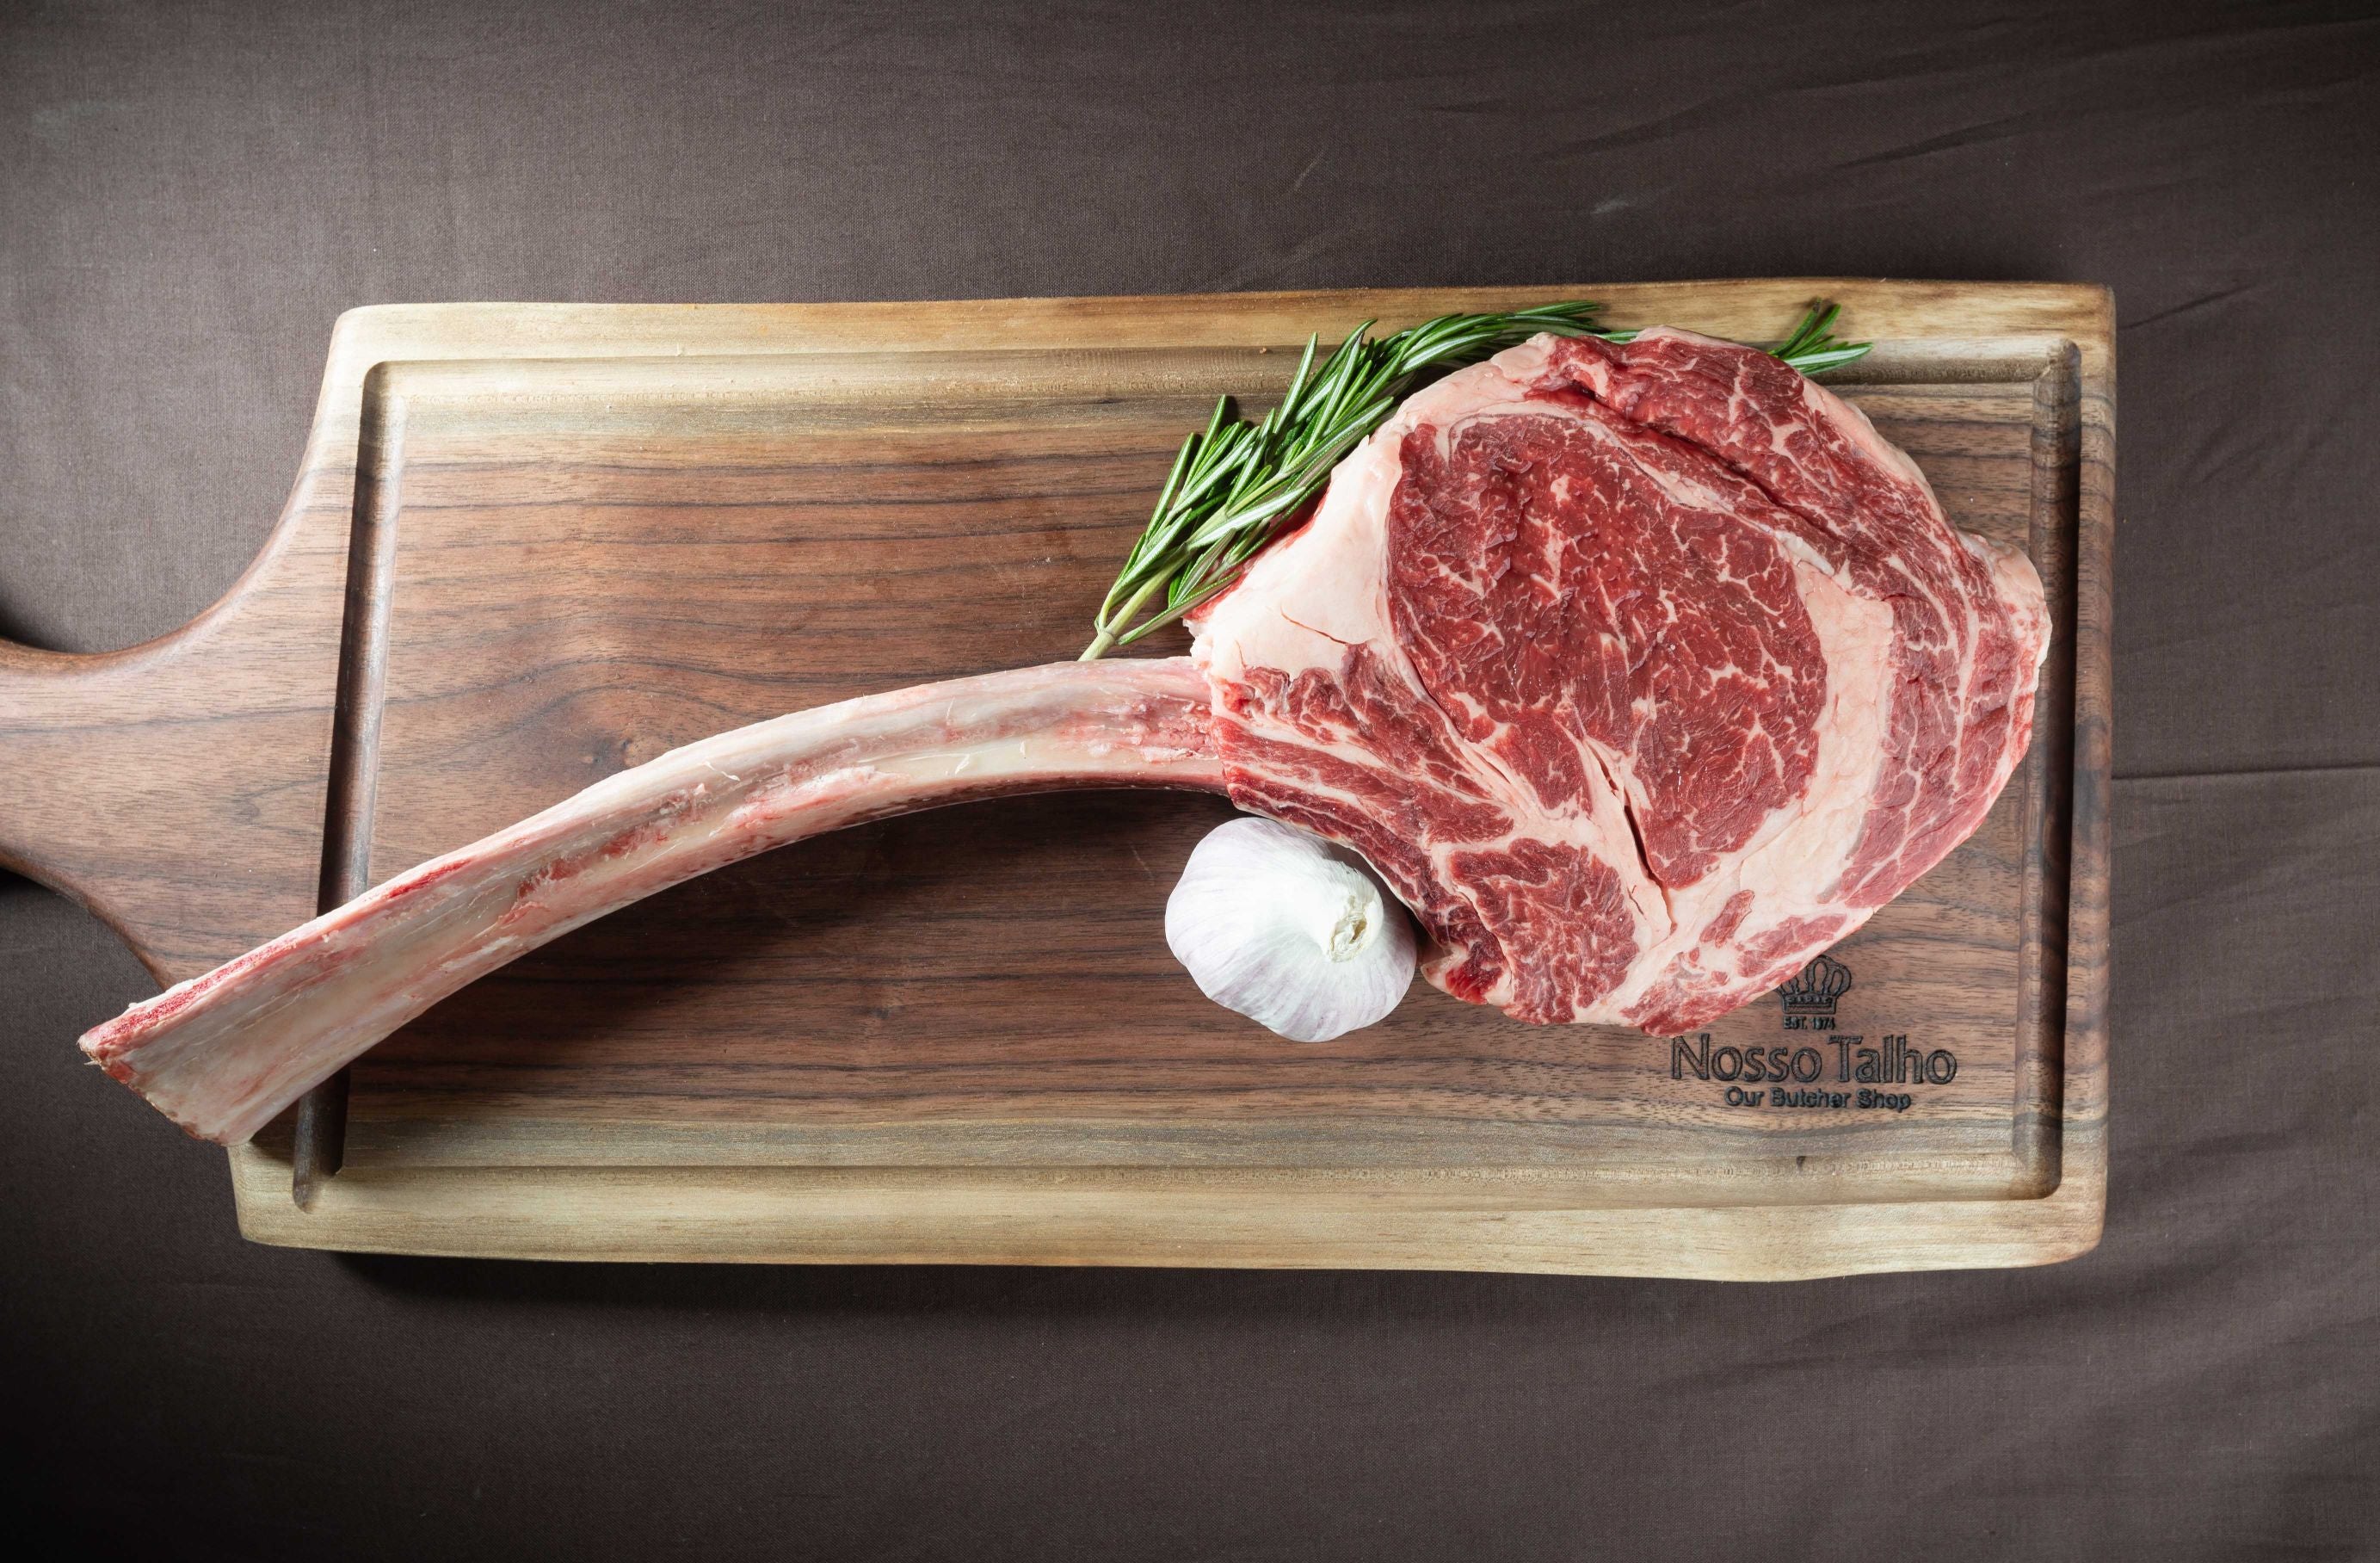 jual usda prime beef tomahawk thick cut ribeye steak daging ribeye tulang - jakarta barat - 51o shop tokopedia on where to buy tomahawk steak online